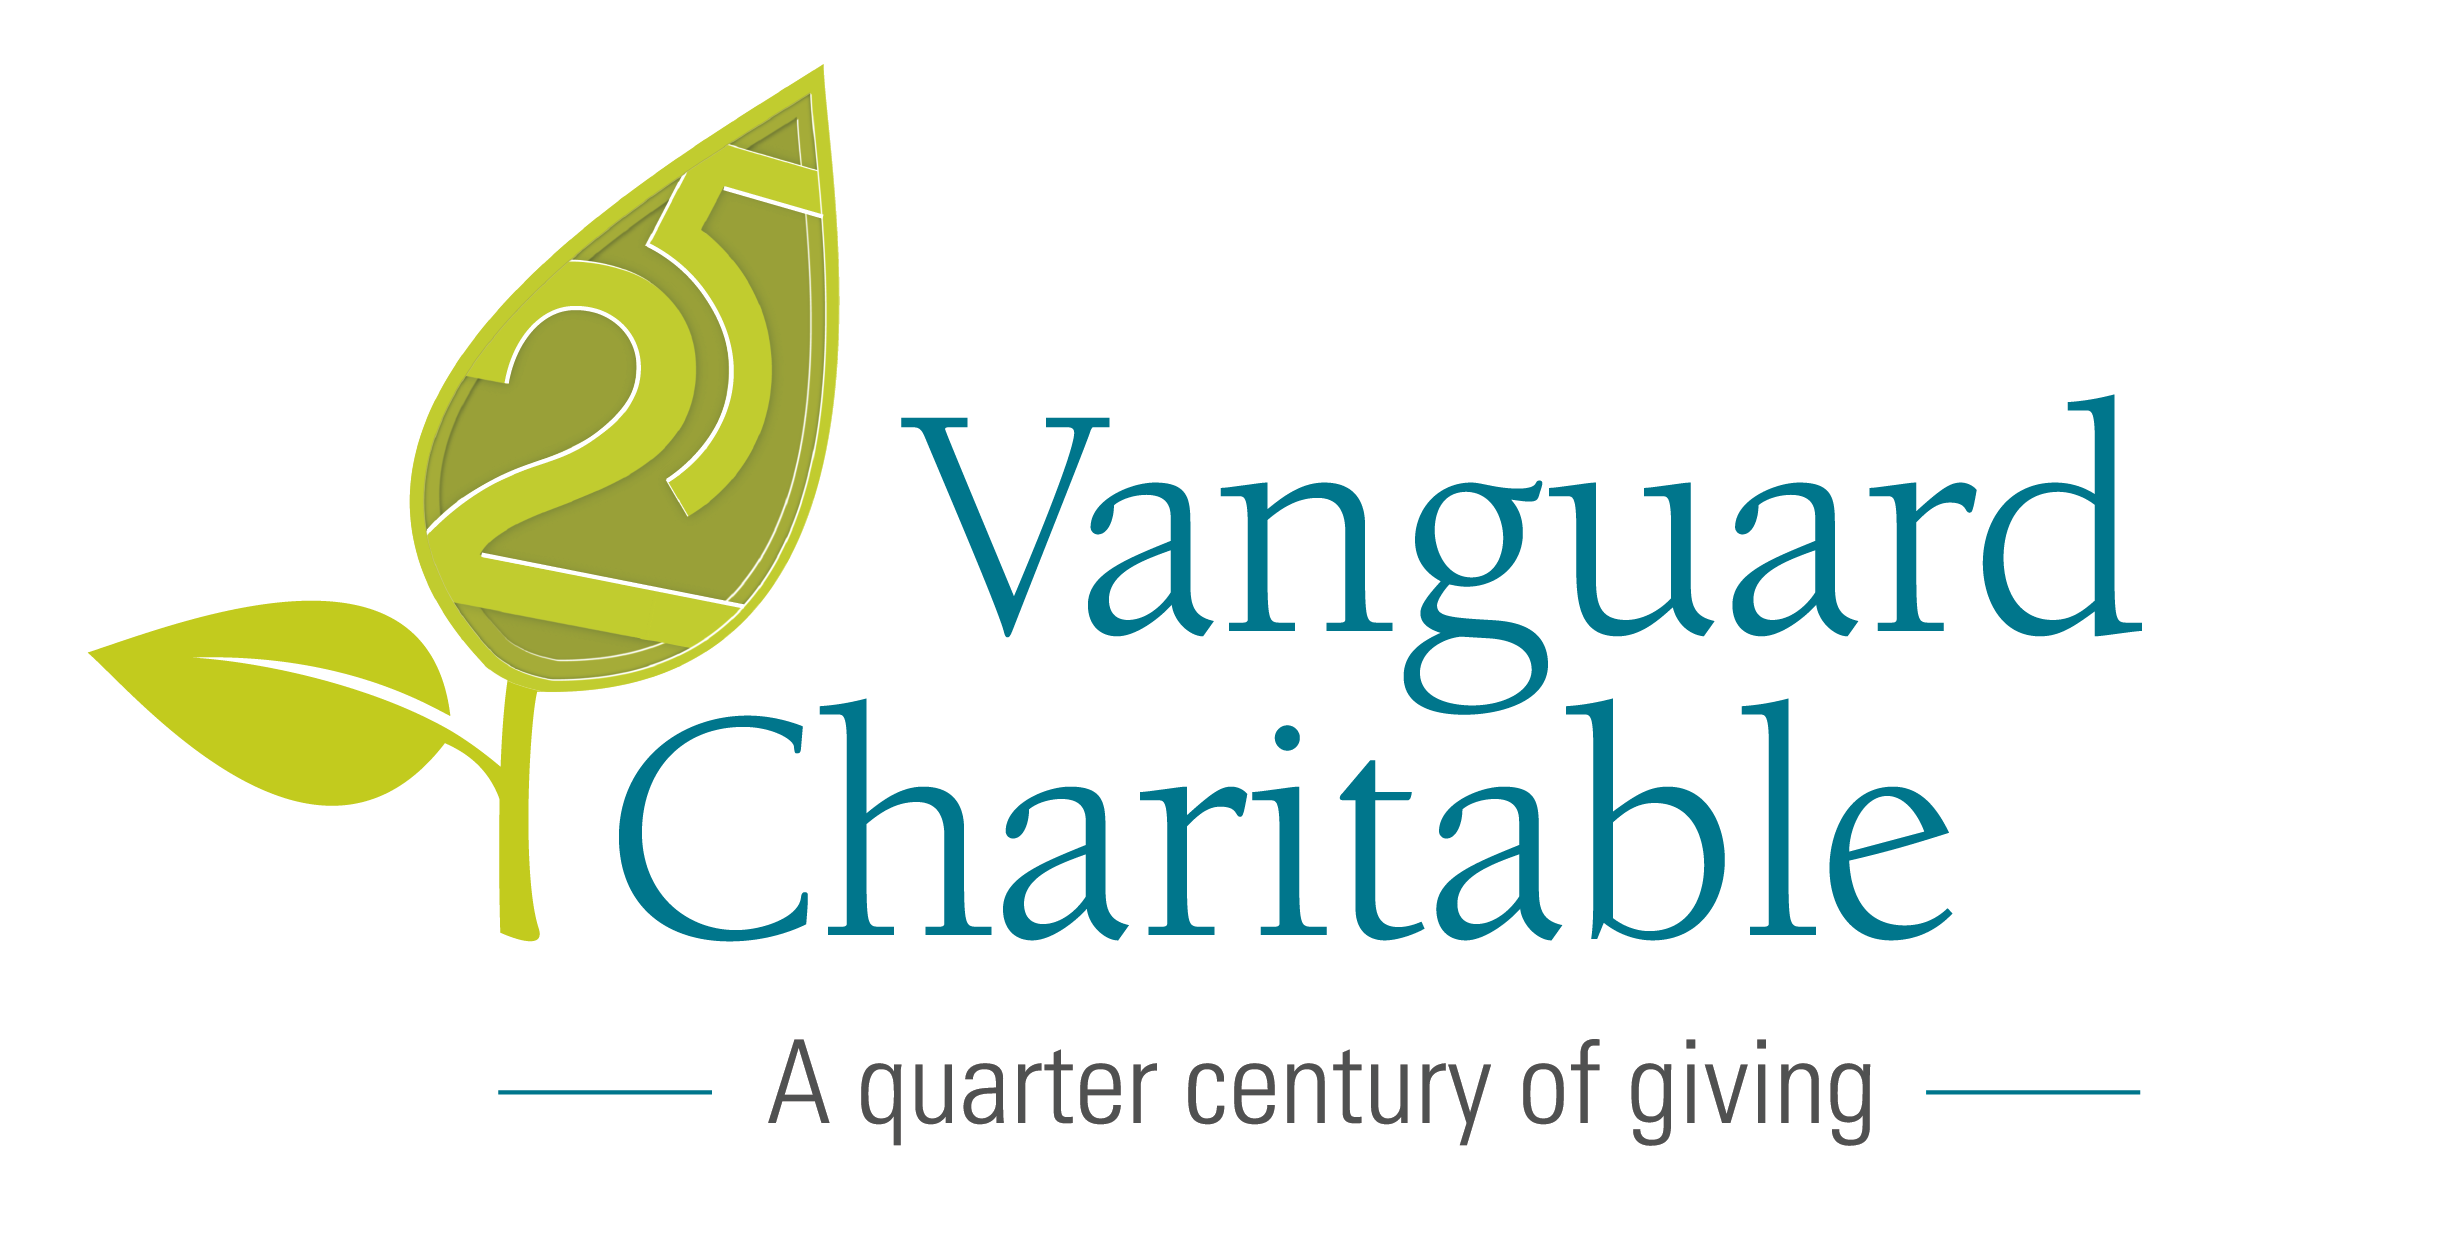 Vanguard Charitable 25th anniversary logo, a quarter century of giving